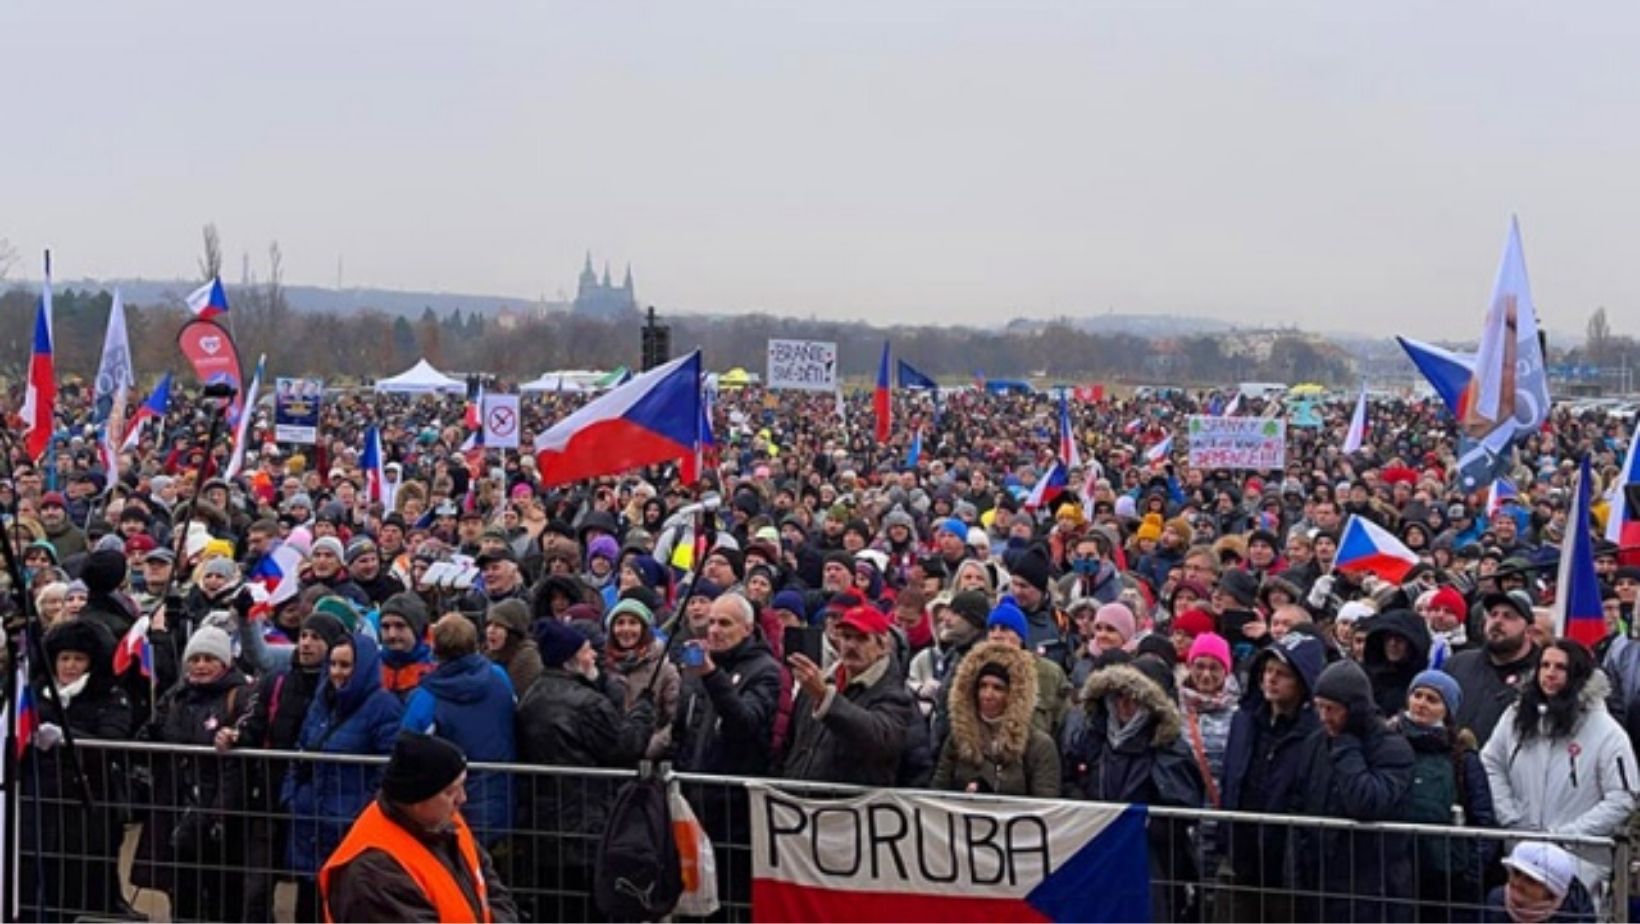 Protest Coronavirus Restrictions in Prague